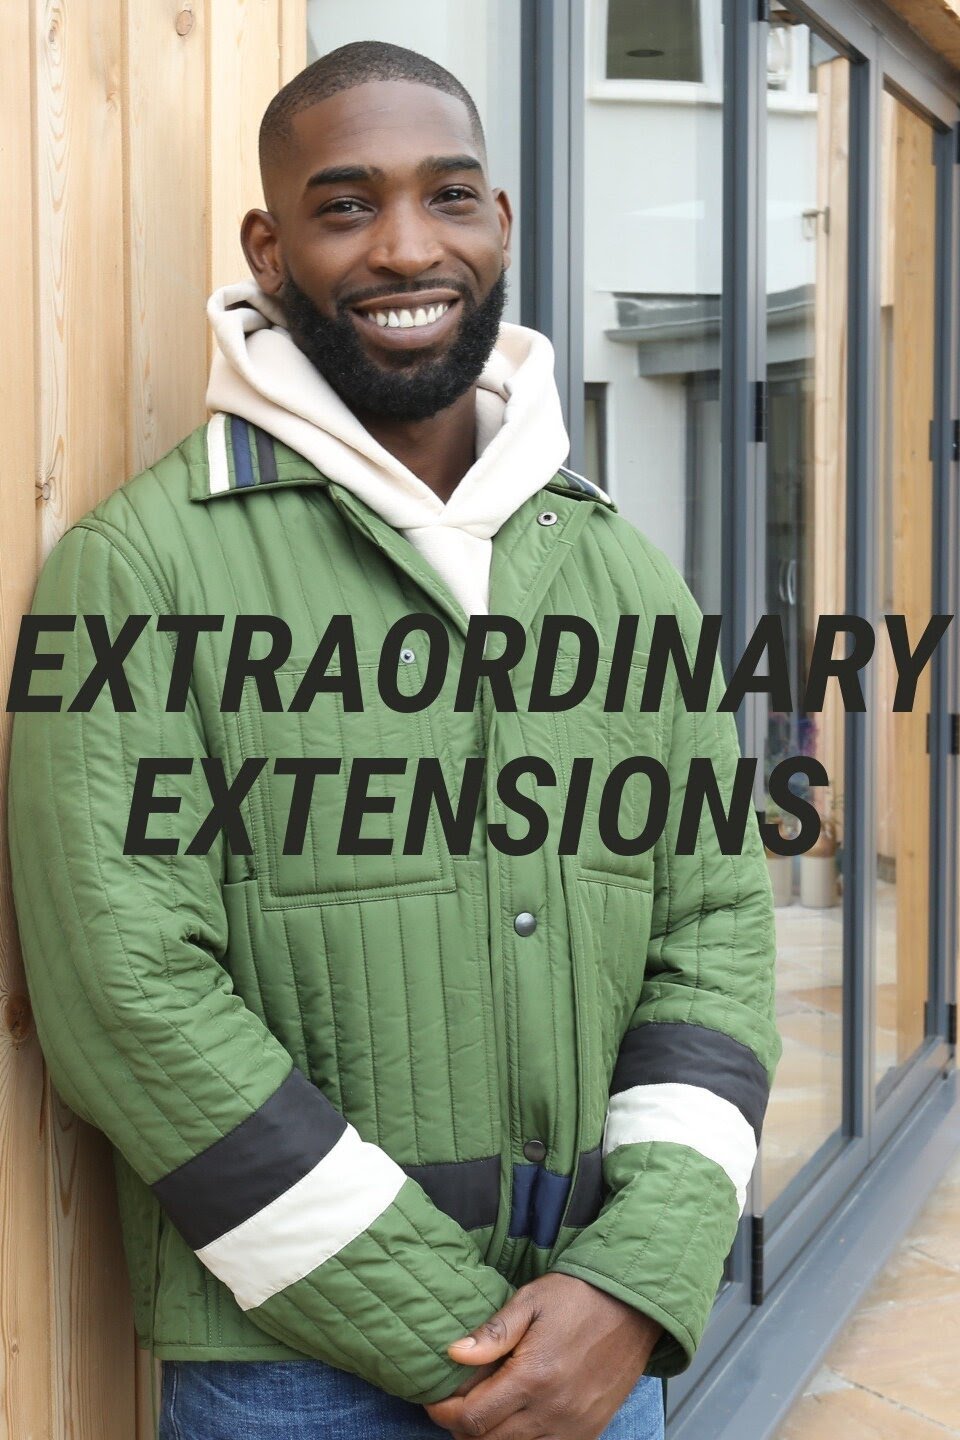 Extraordinary Extensions S02e01 [1080p] (x265) Eac100baca758cfe6206698baedb5fc5